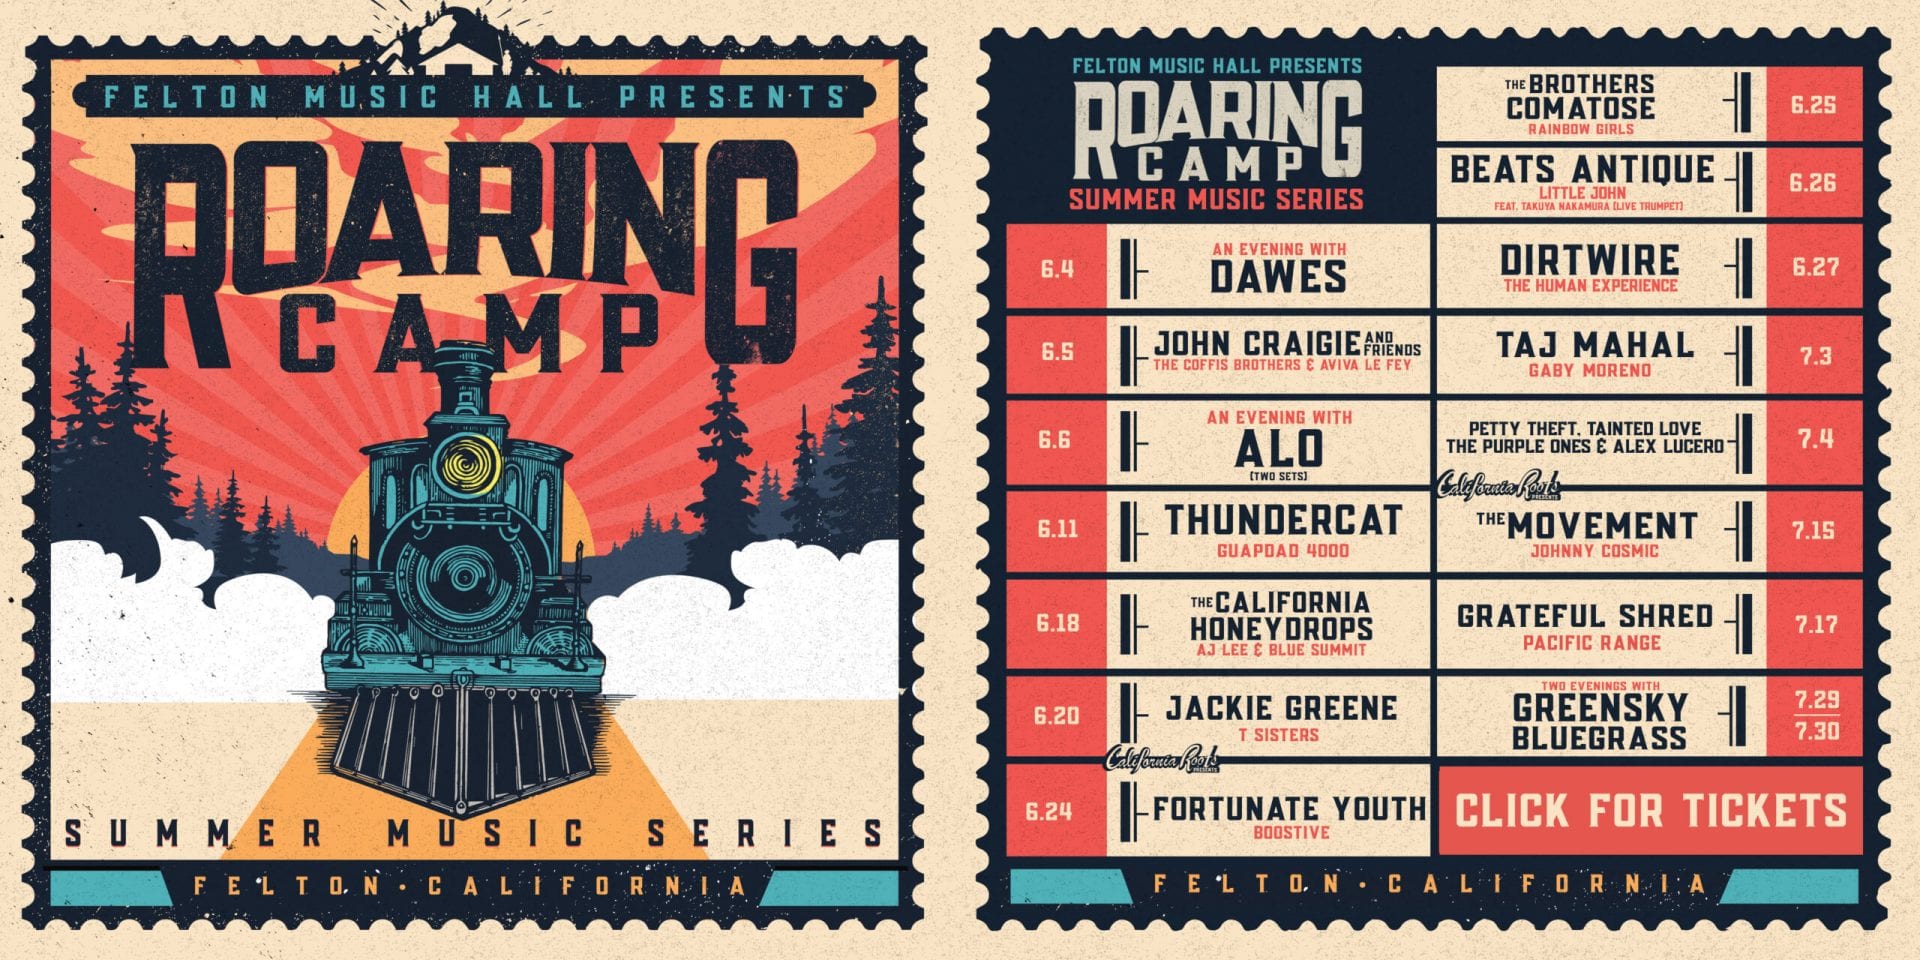 oaring-camp-music-summer